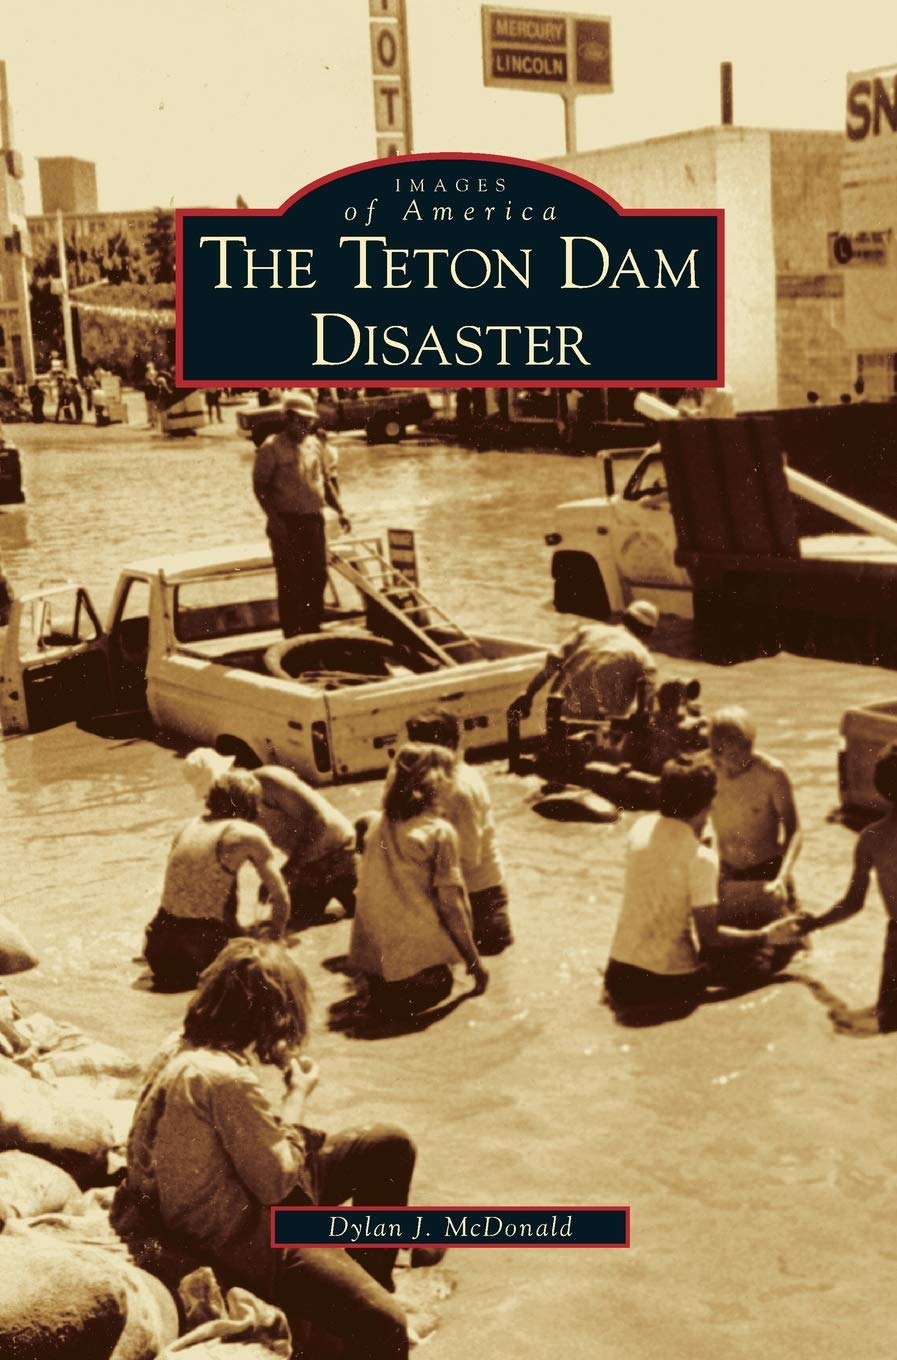 The Teton Dam disaster (book cover)